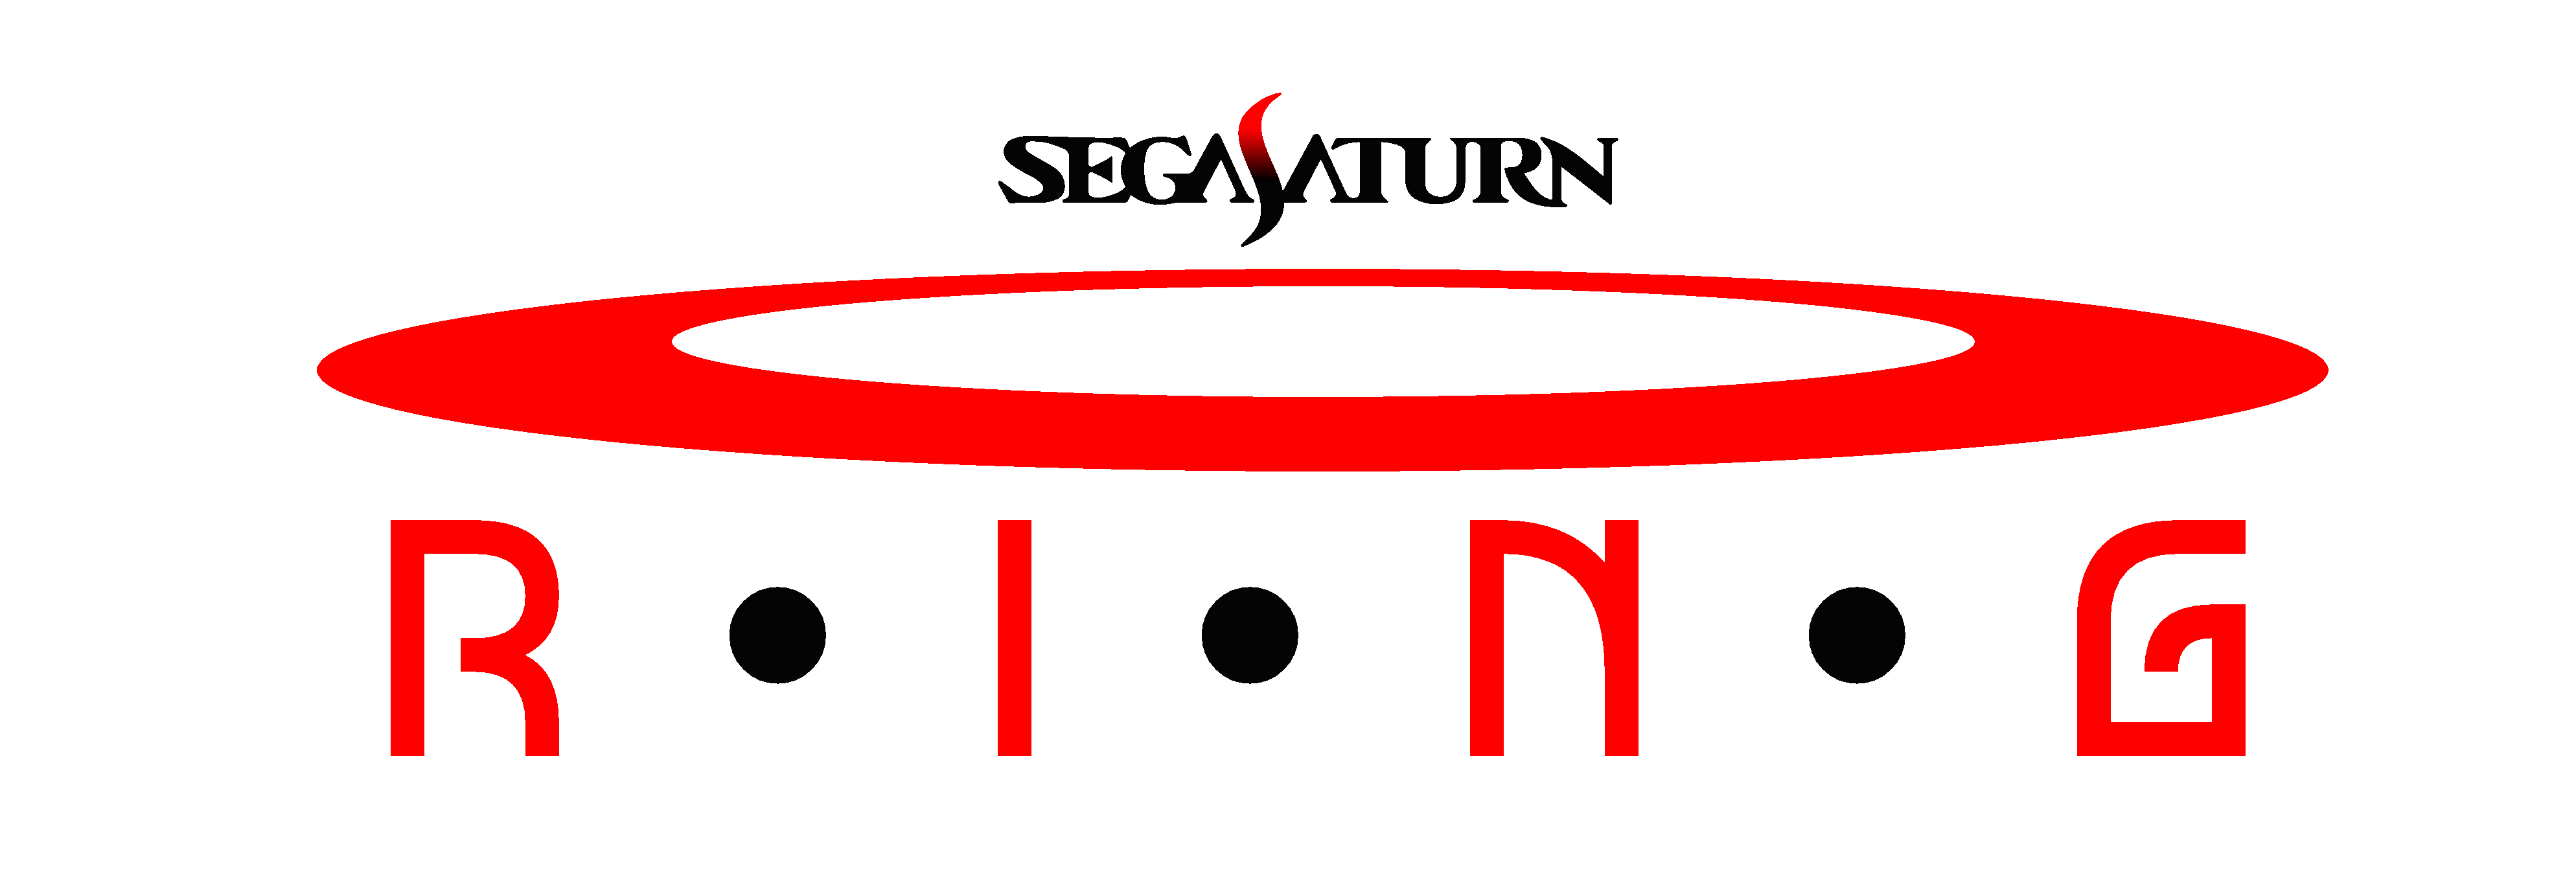 Sega Saturn Ring (Japan) logo.png